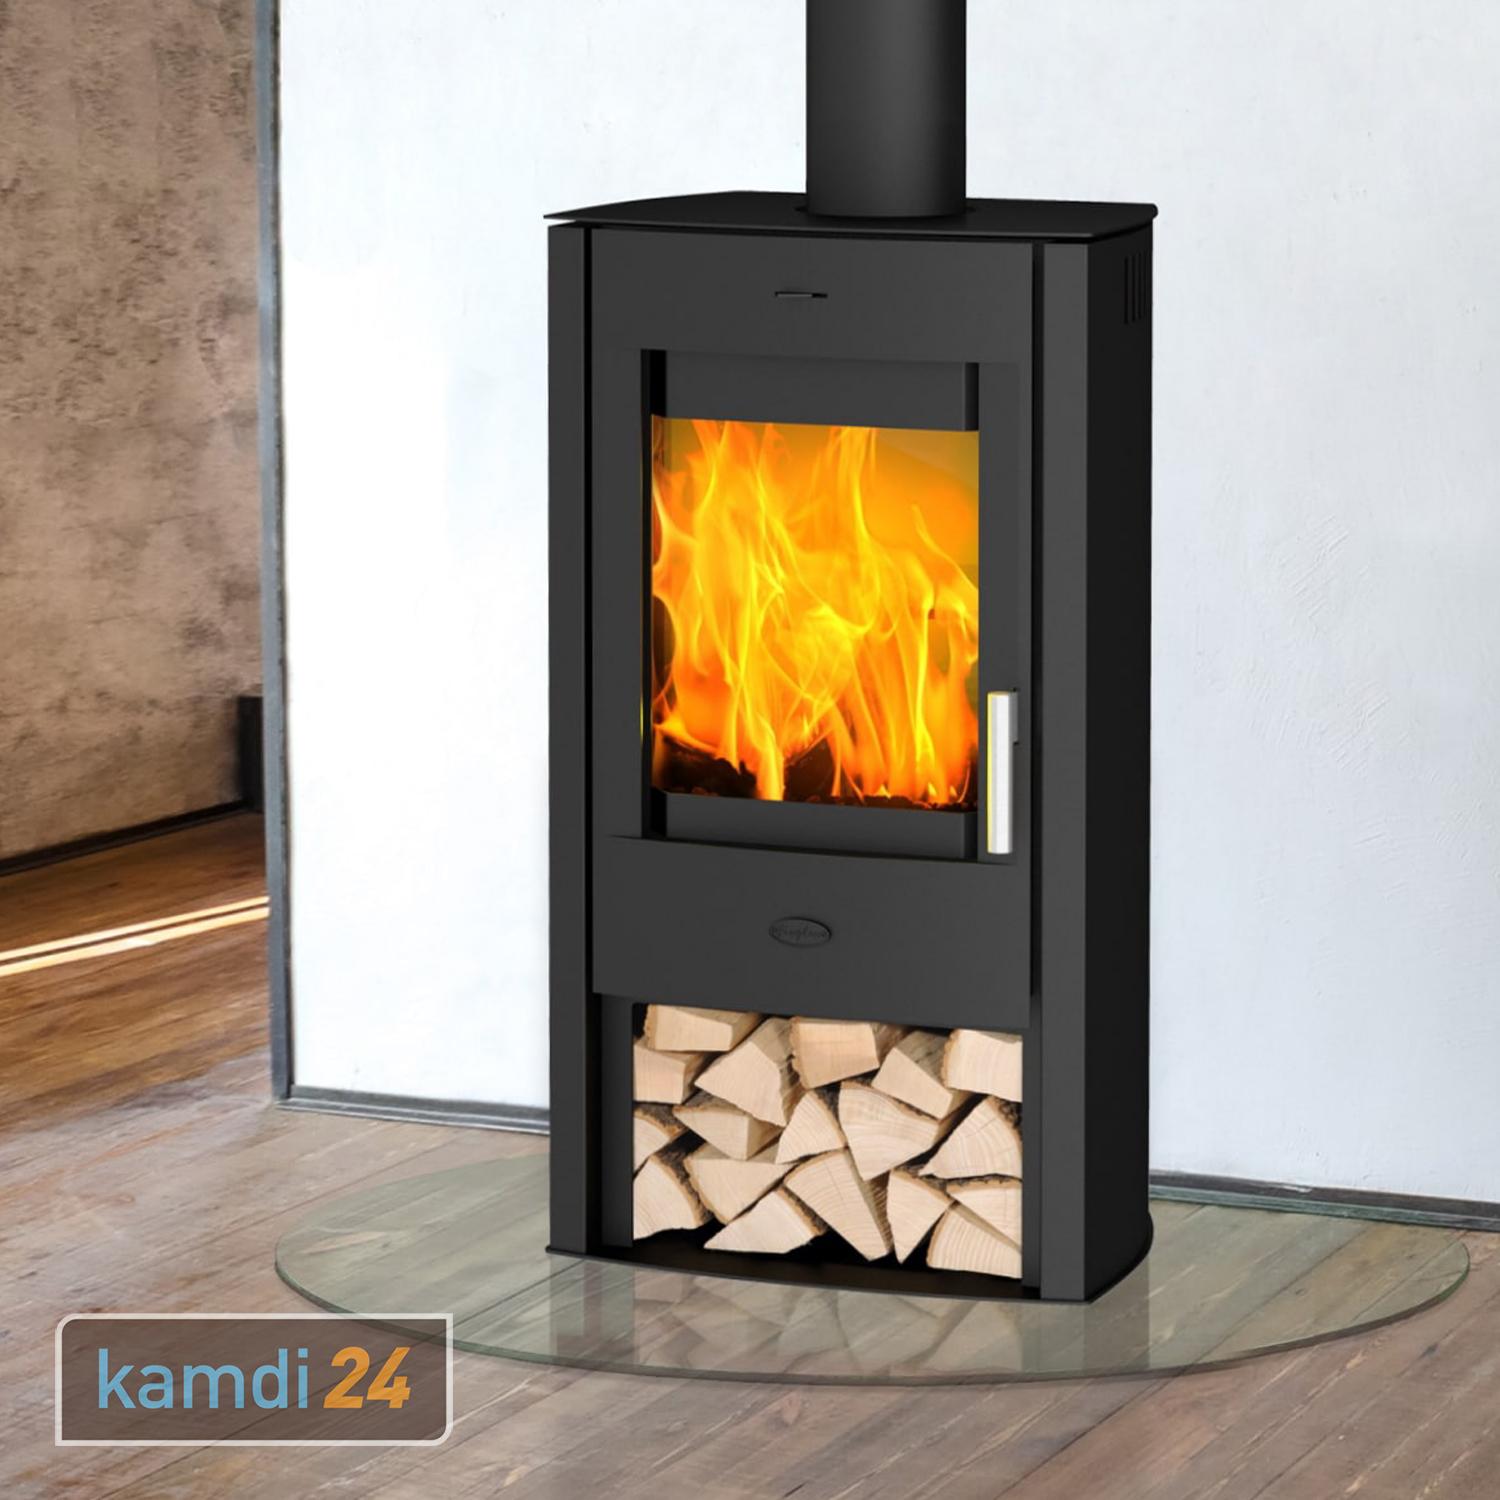 Kaminofen | Tuvalu | Holzfach kamdi24-Shop | kaufen | im kW | 6 Fireplace